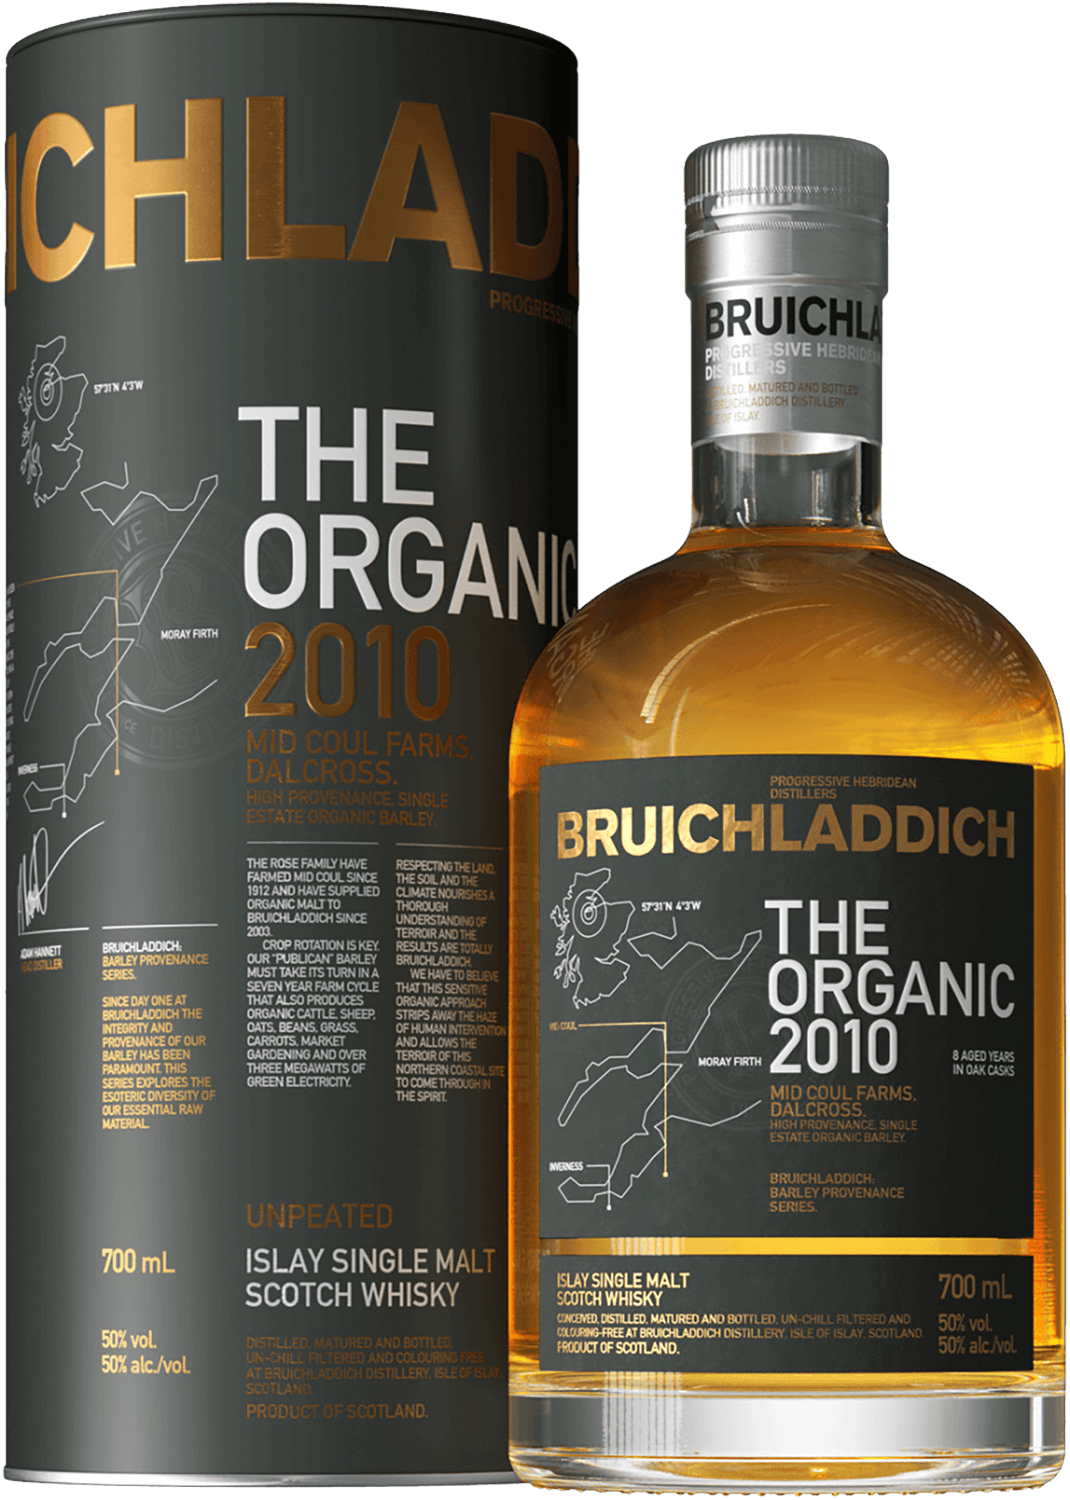 Bruichladdich Organic Islay single malt scotch whisky (gift box) bunnahabhain stiuireadair islay single malt scotch whisky gift box